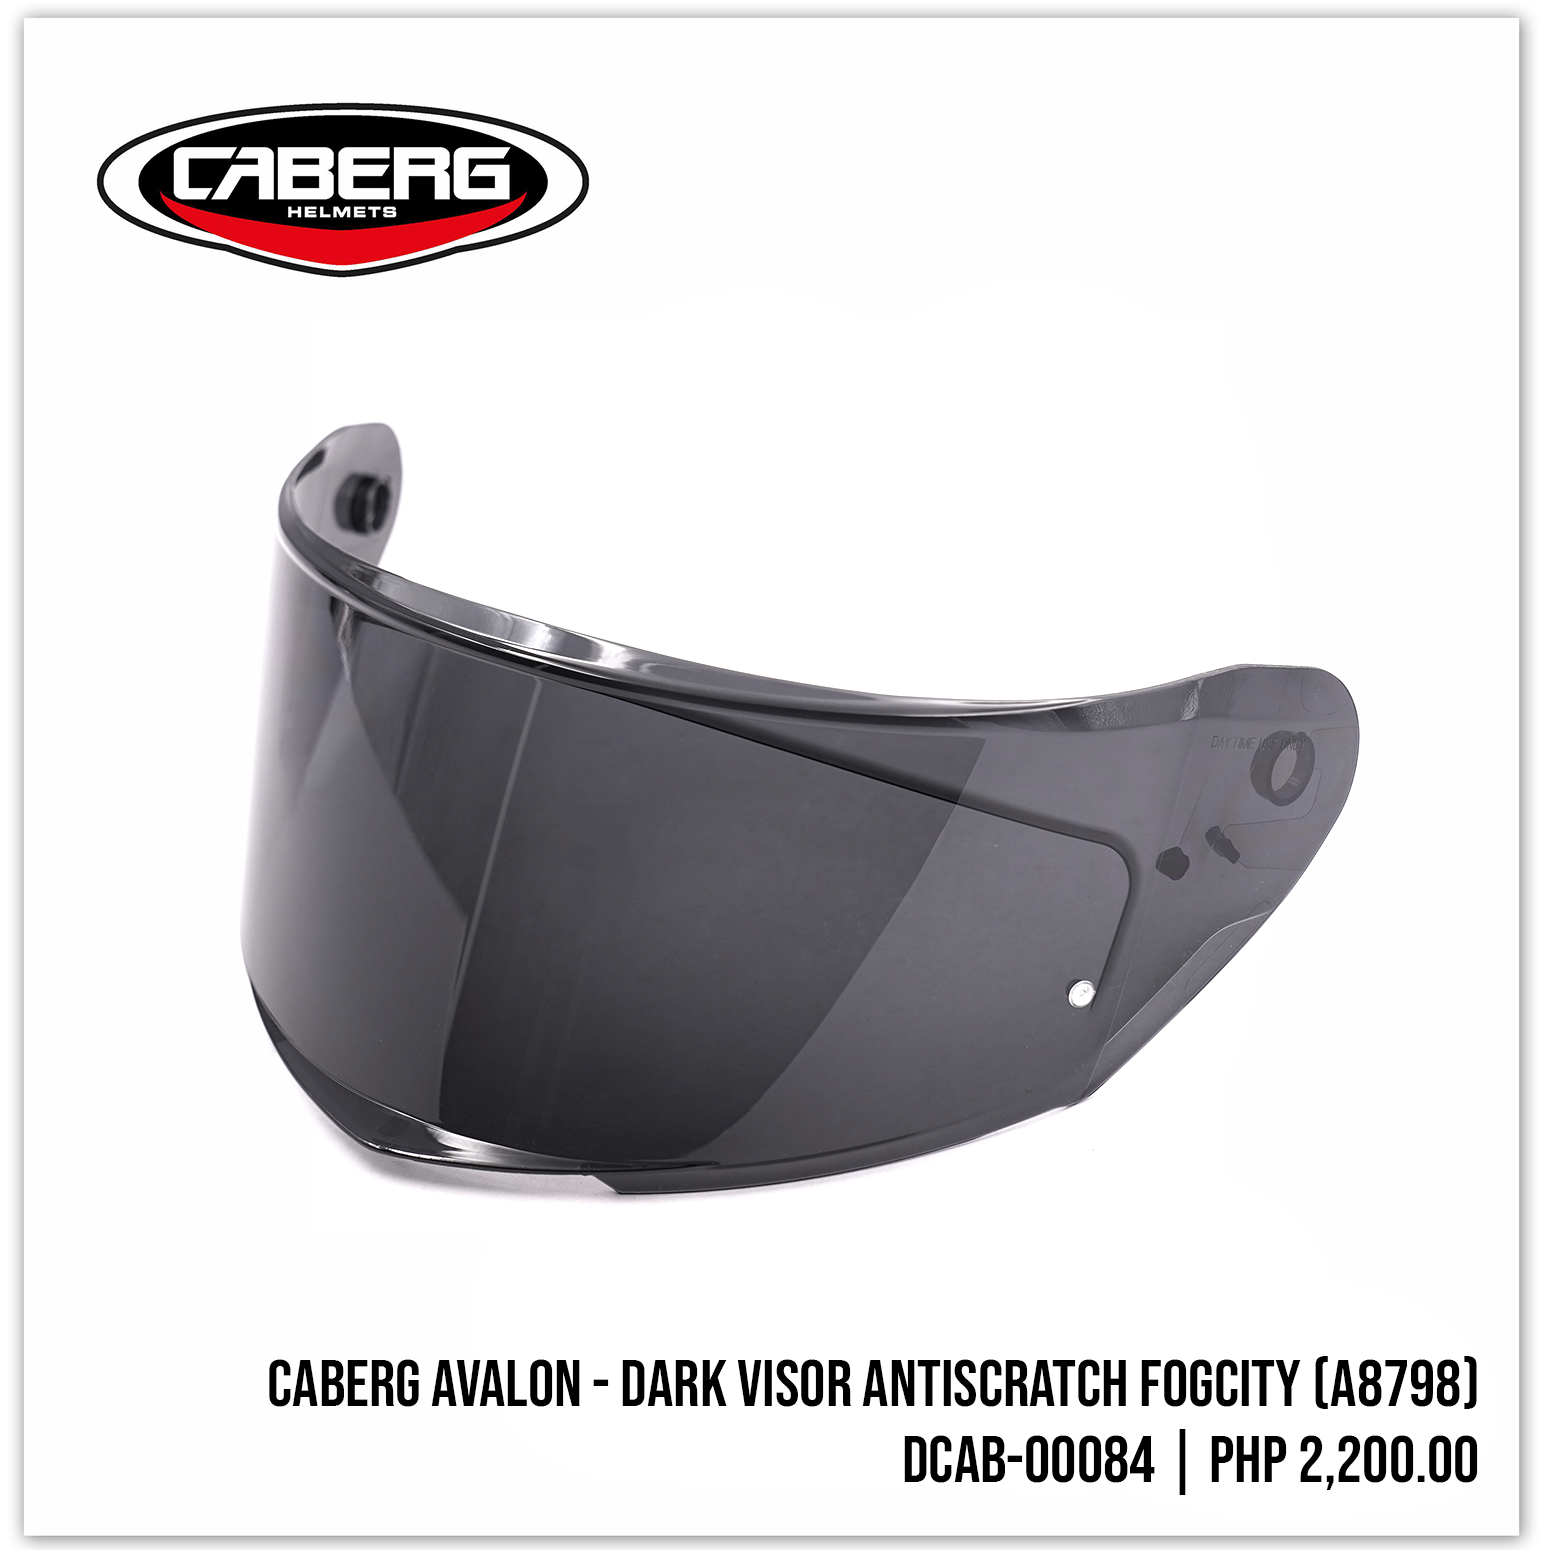 Caberg Avalon - Dark Visor Antiscratch Fogcity (A8798)